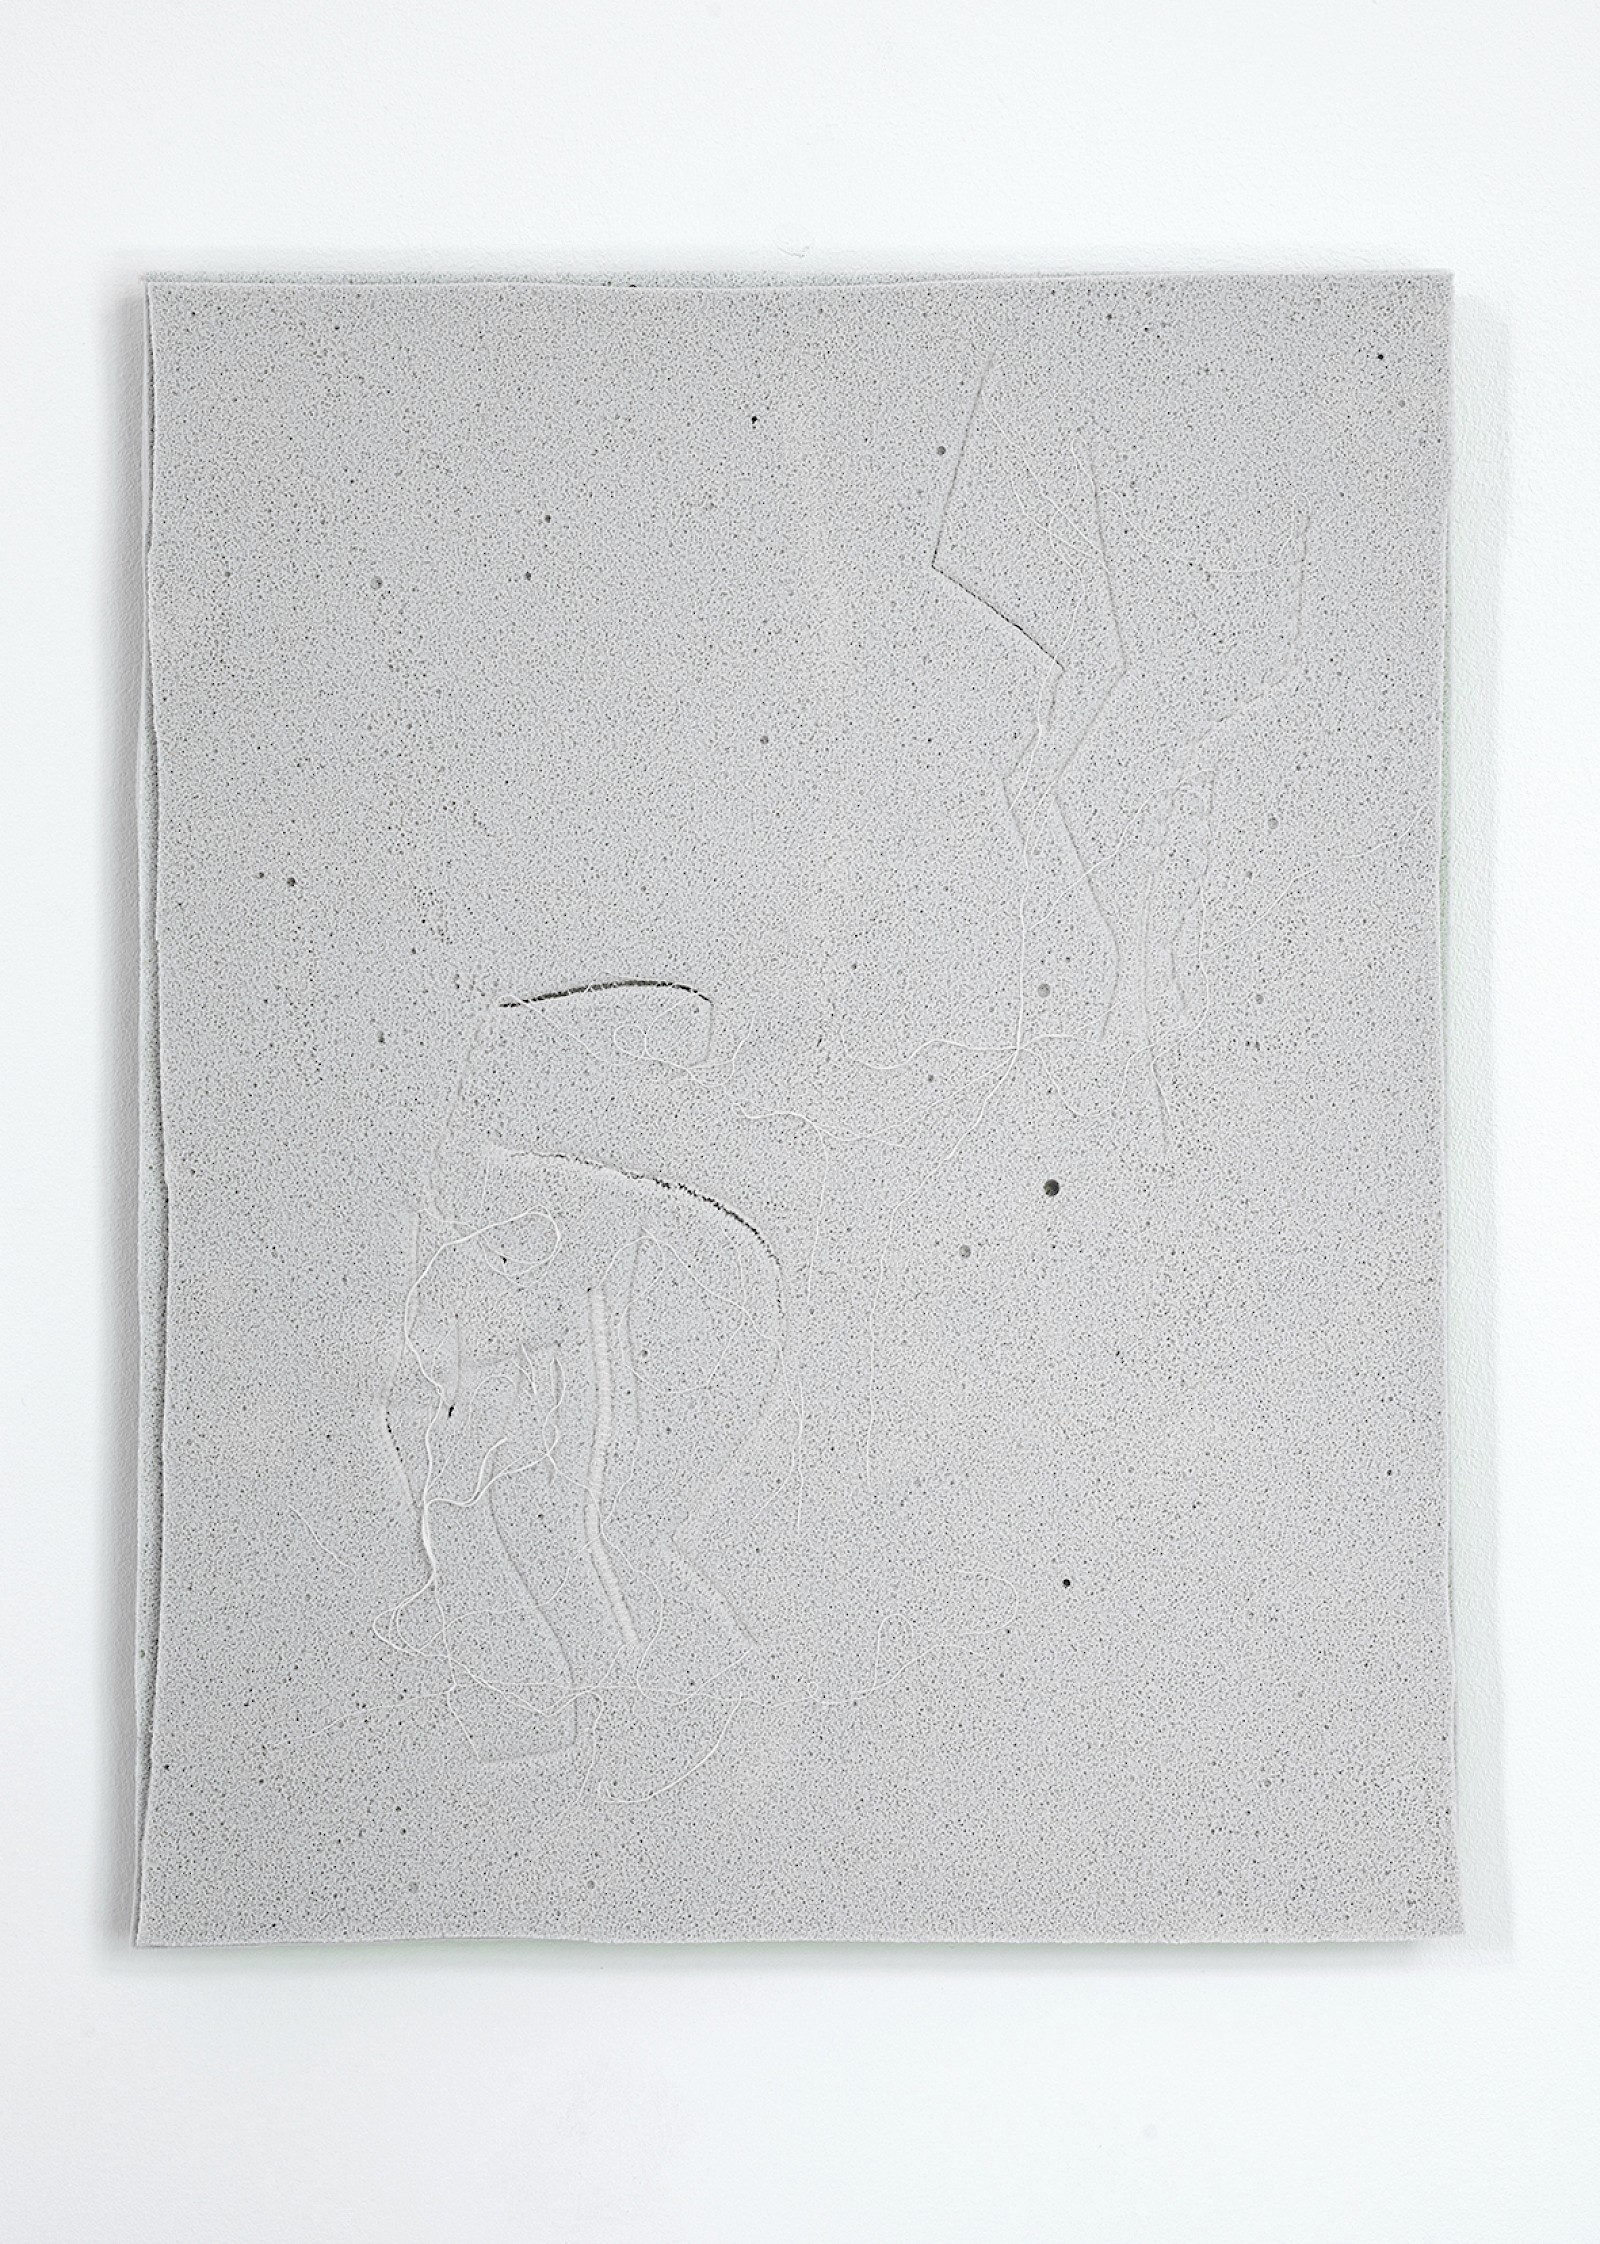 Image - Stichtes in the air I, Porcelain, size: 34 x 27 x 1cm